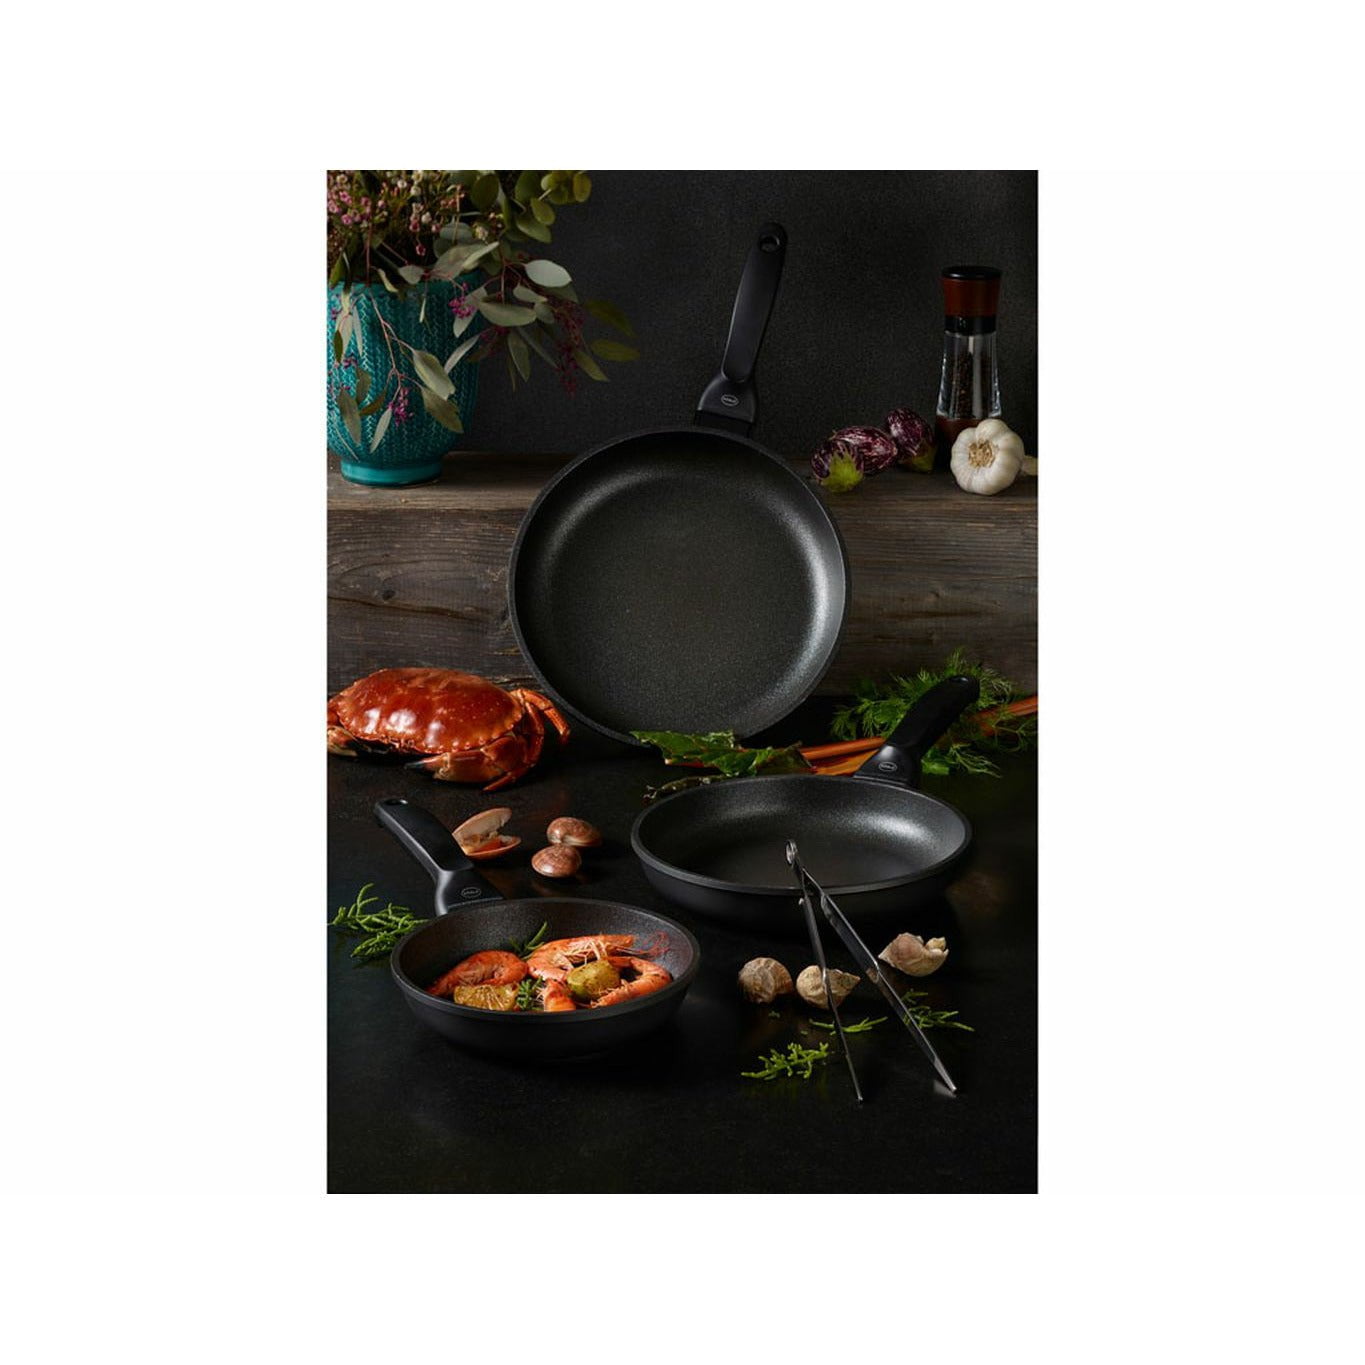 Rösle Cadini Pro Resist Frying Pan, 28 Cm